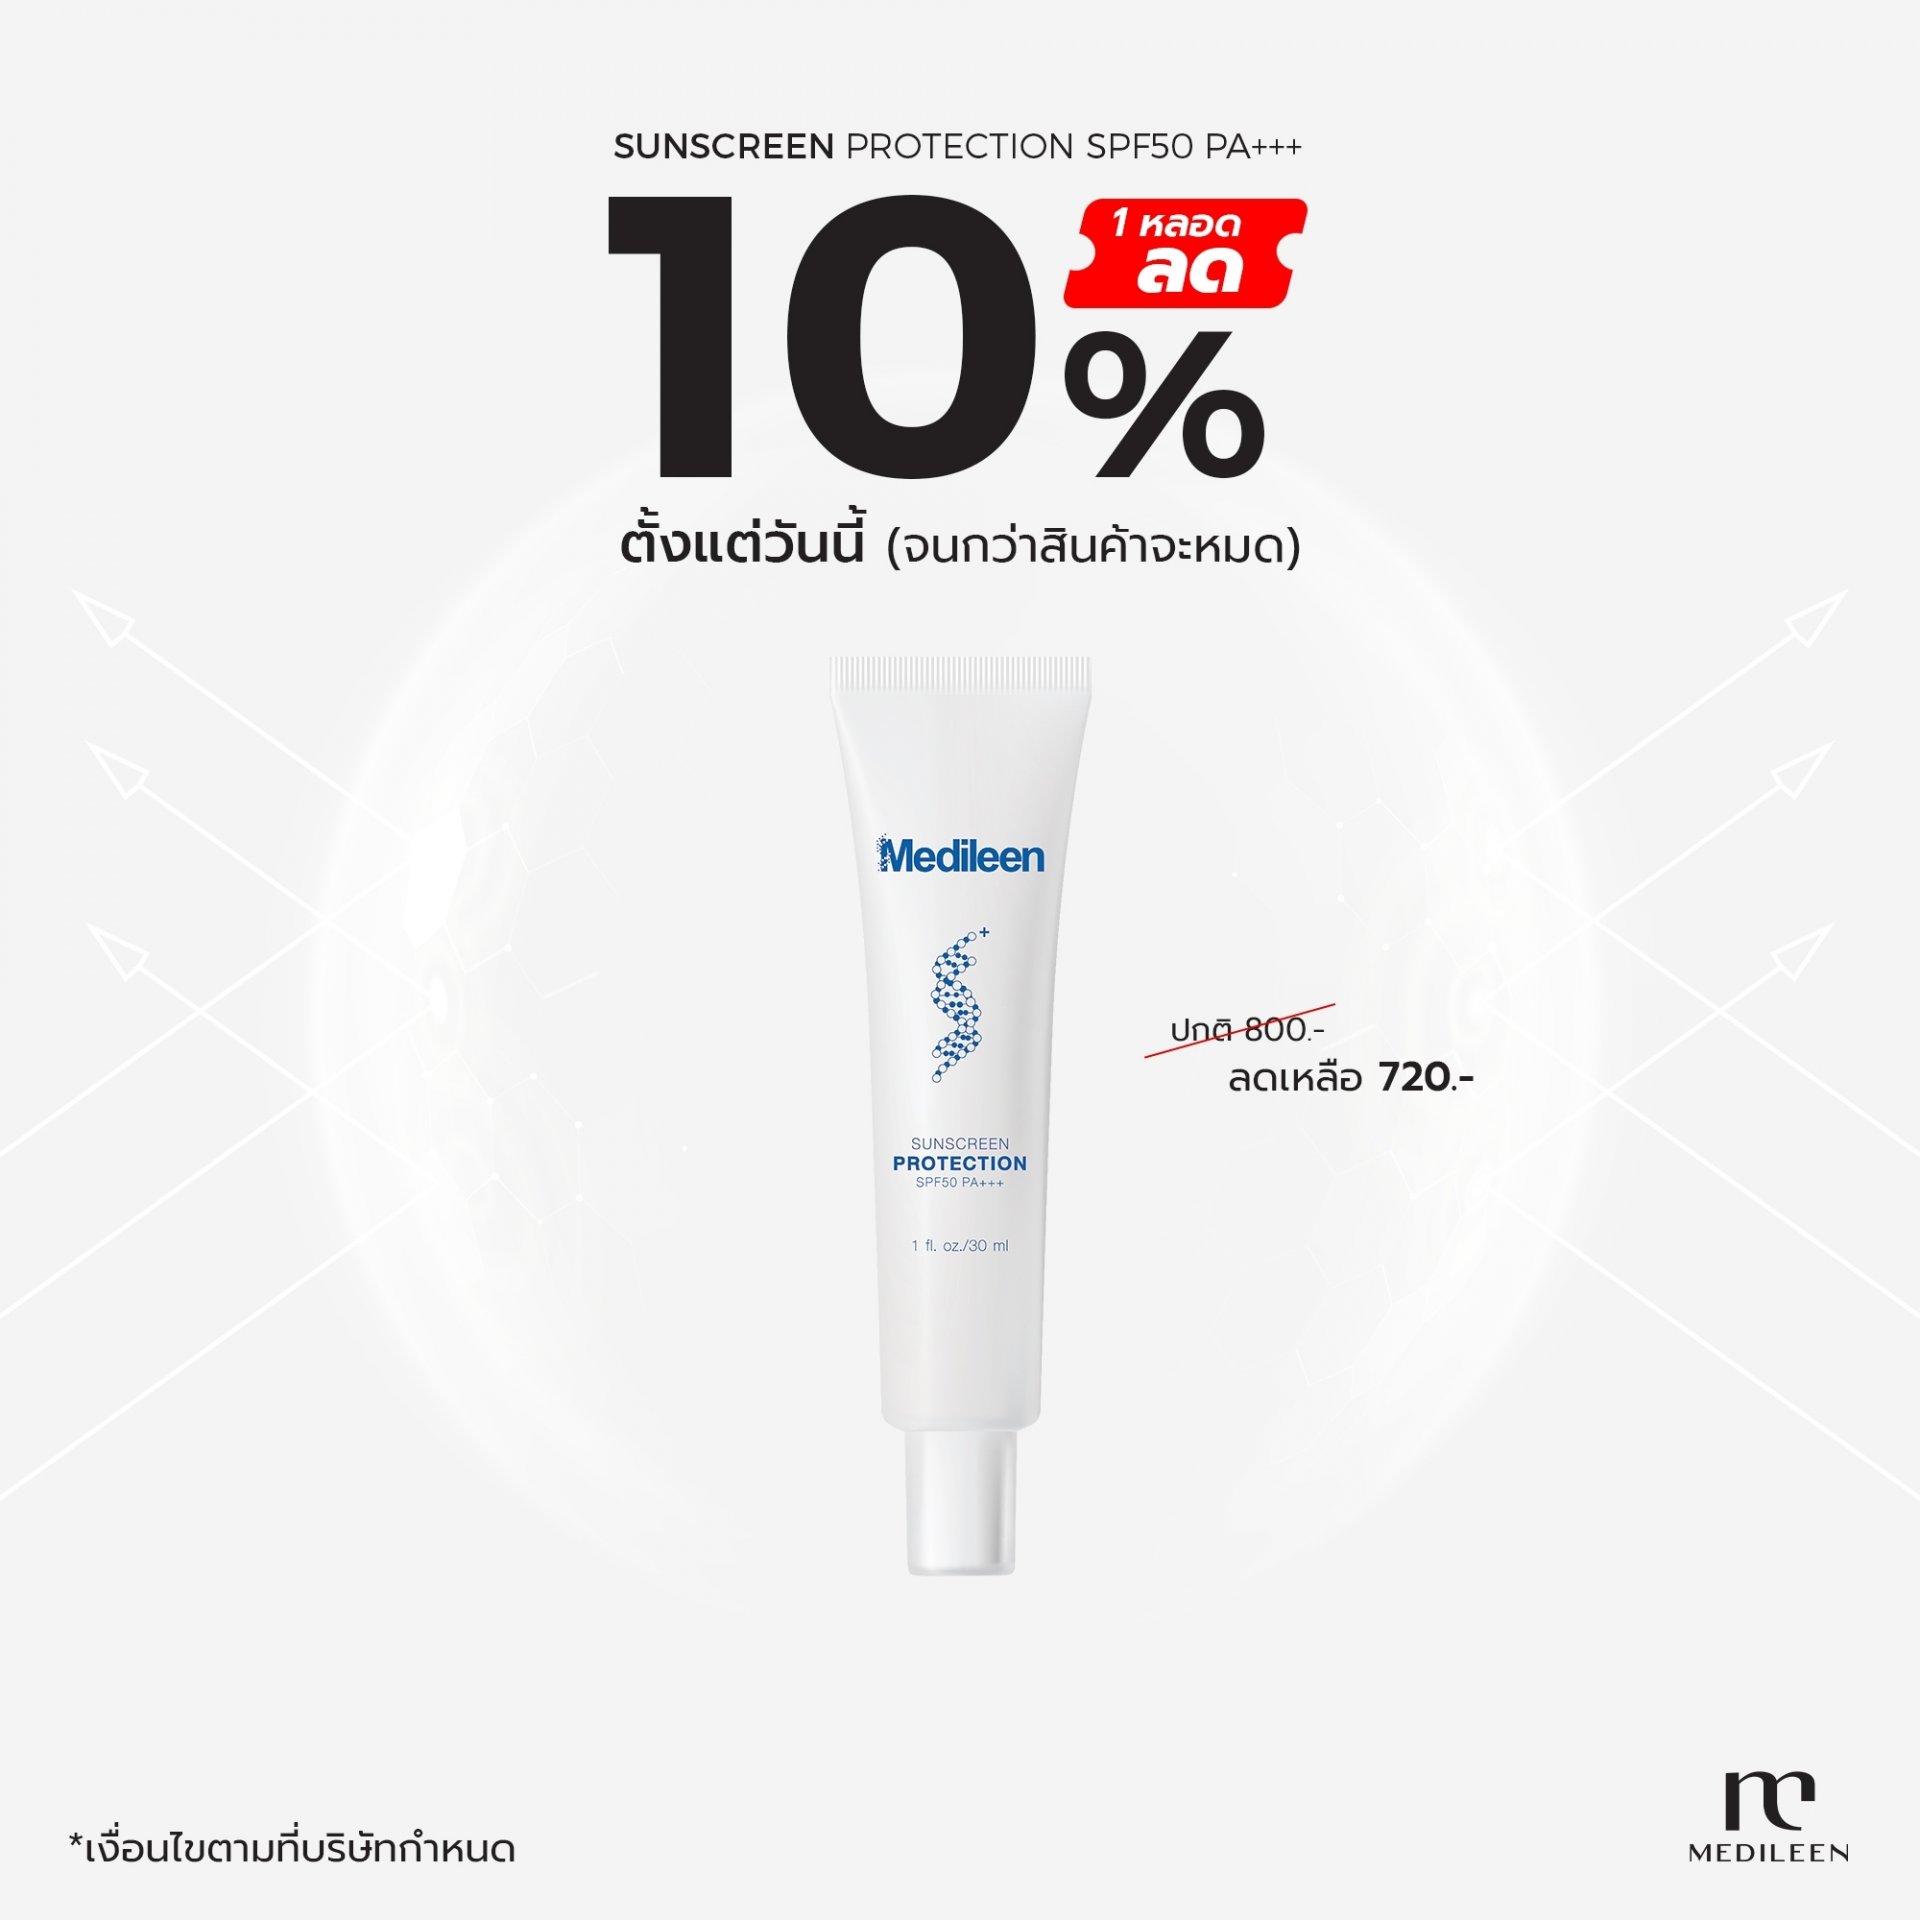 Sunscreen Protection SPF50 PA+++ -10%